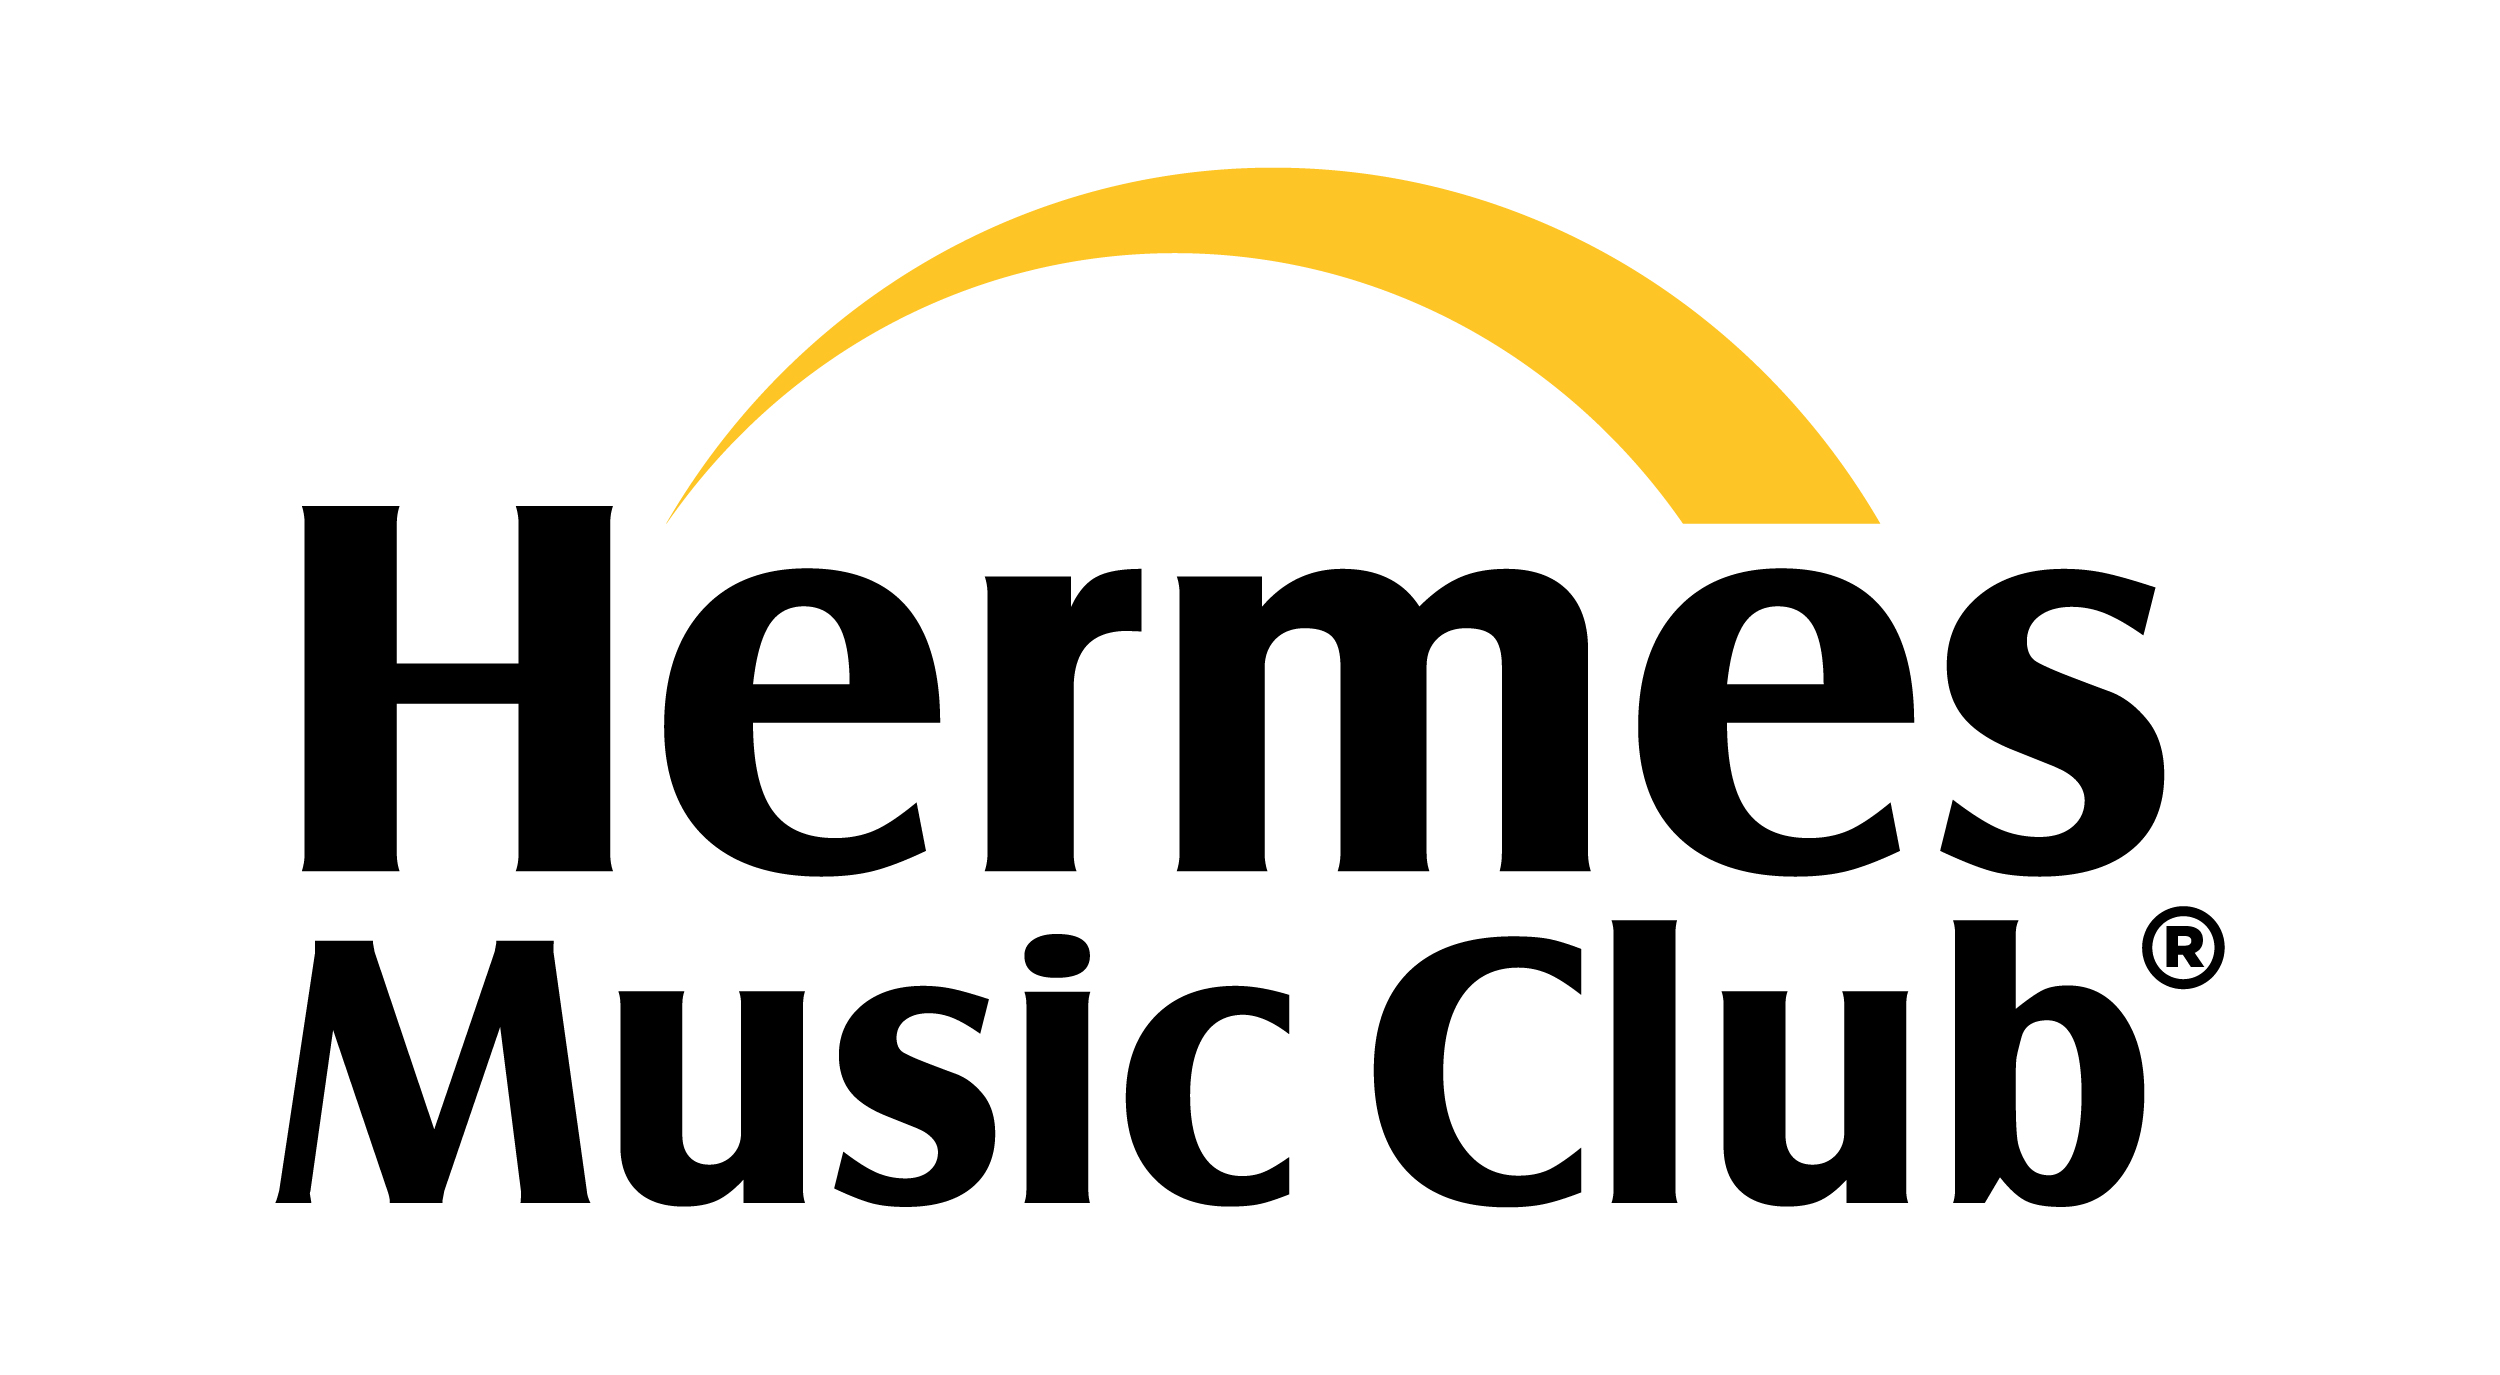 HOT SALE Hermes Music Club